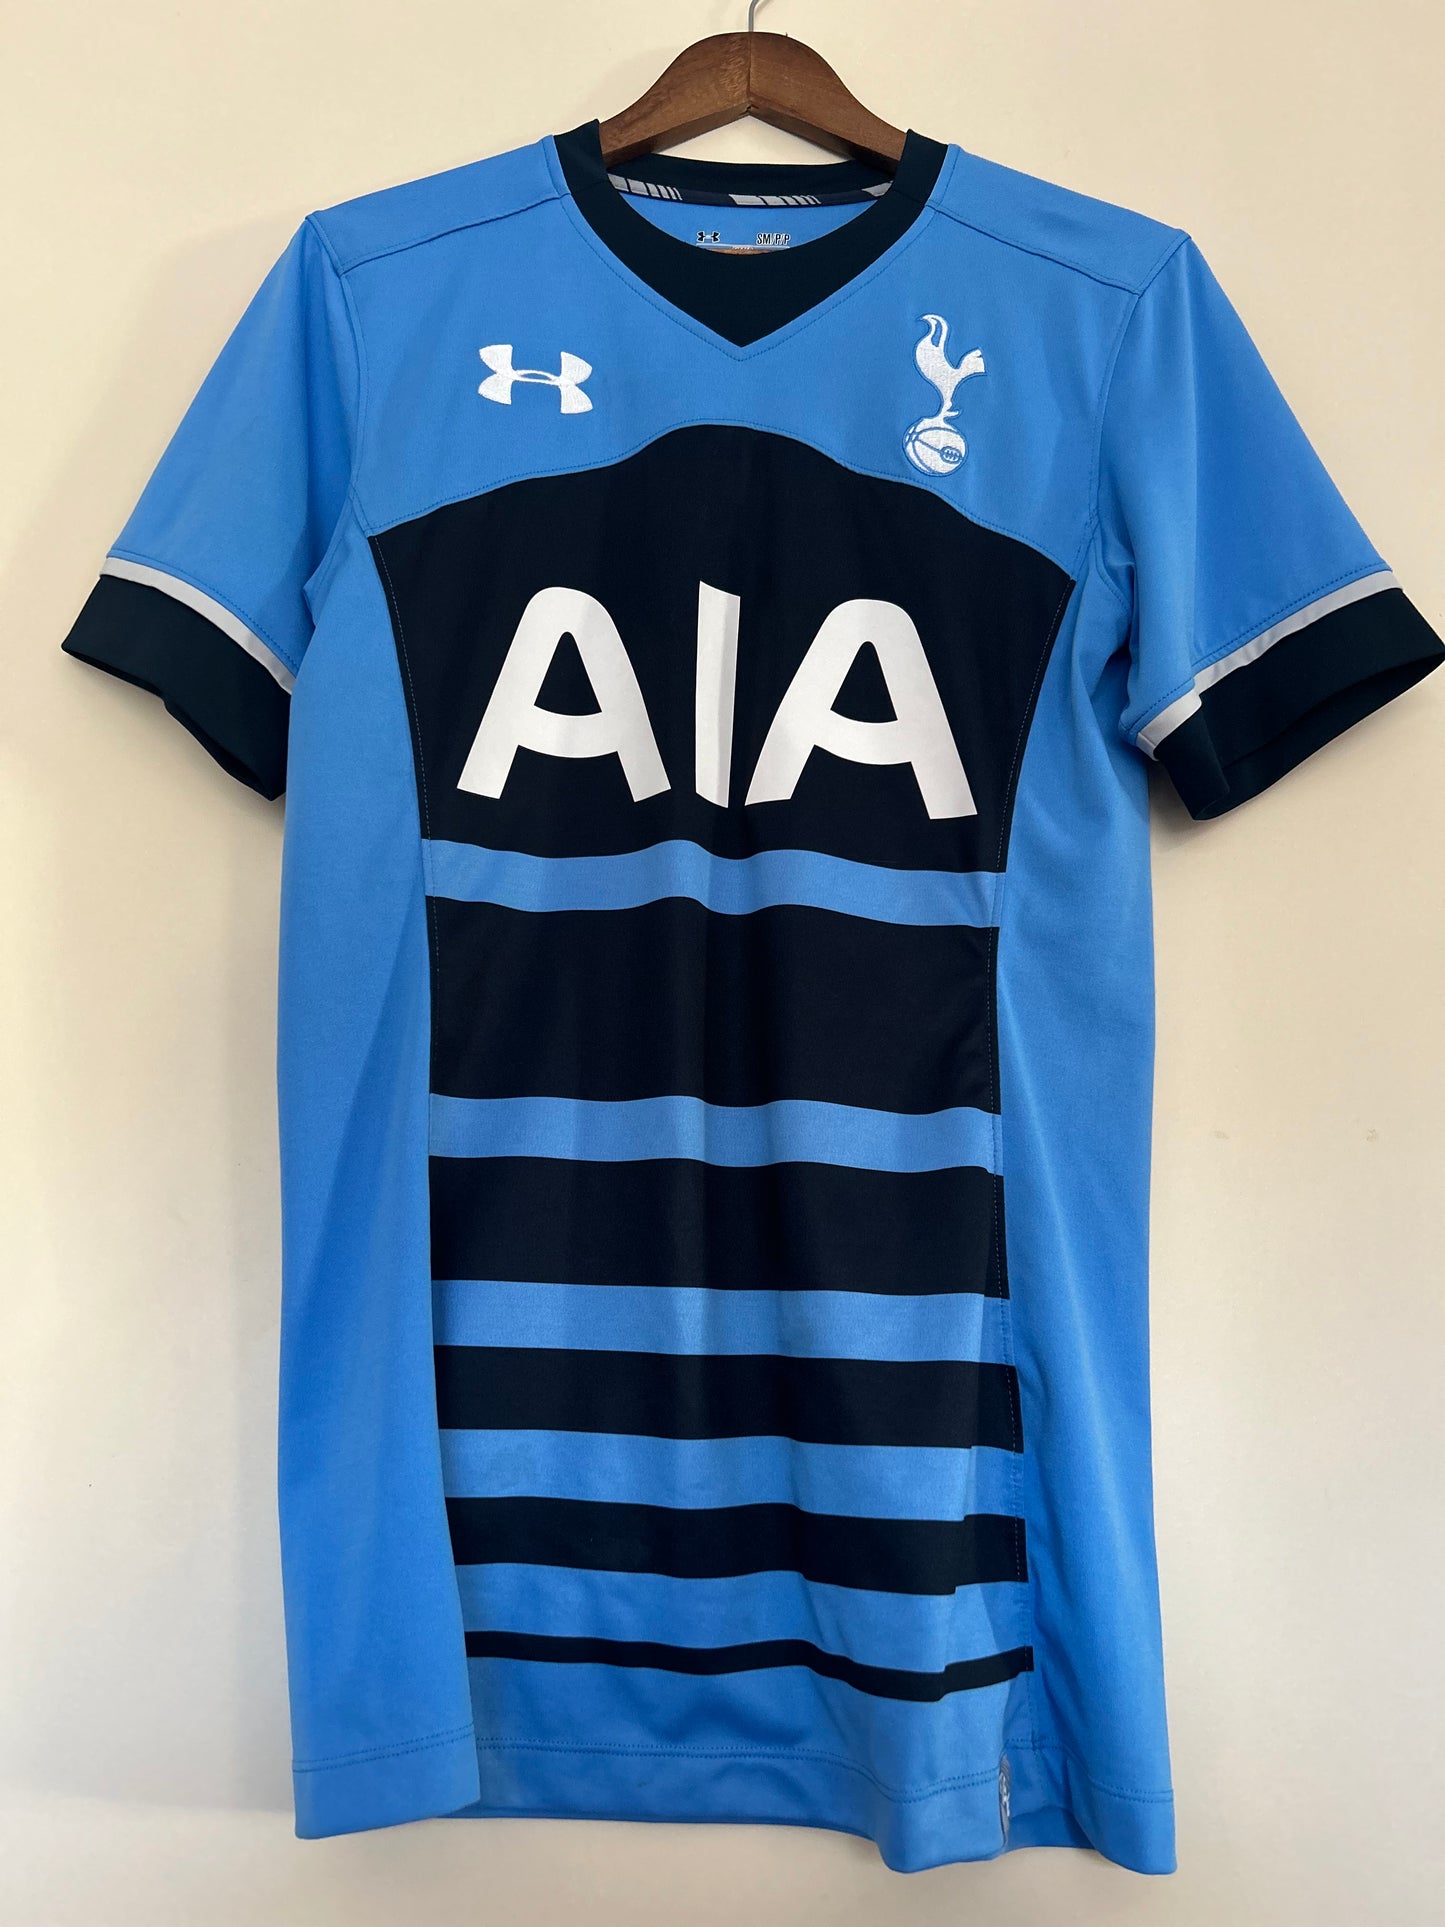 2015/16 Tottenham Hotspur away kit by Under Armor